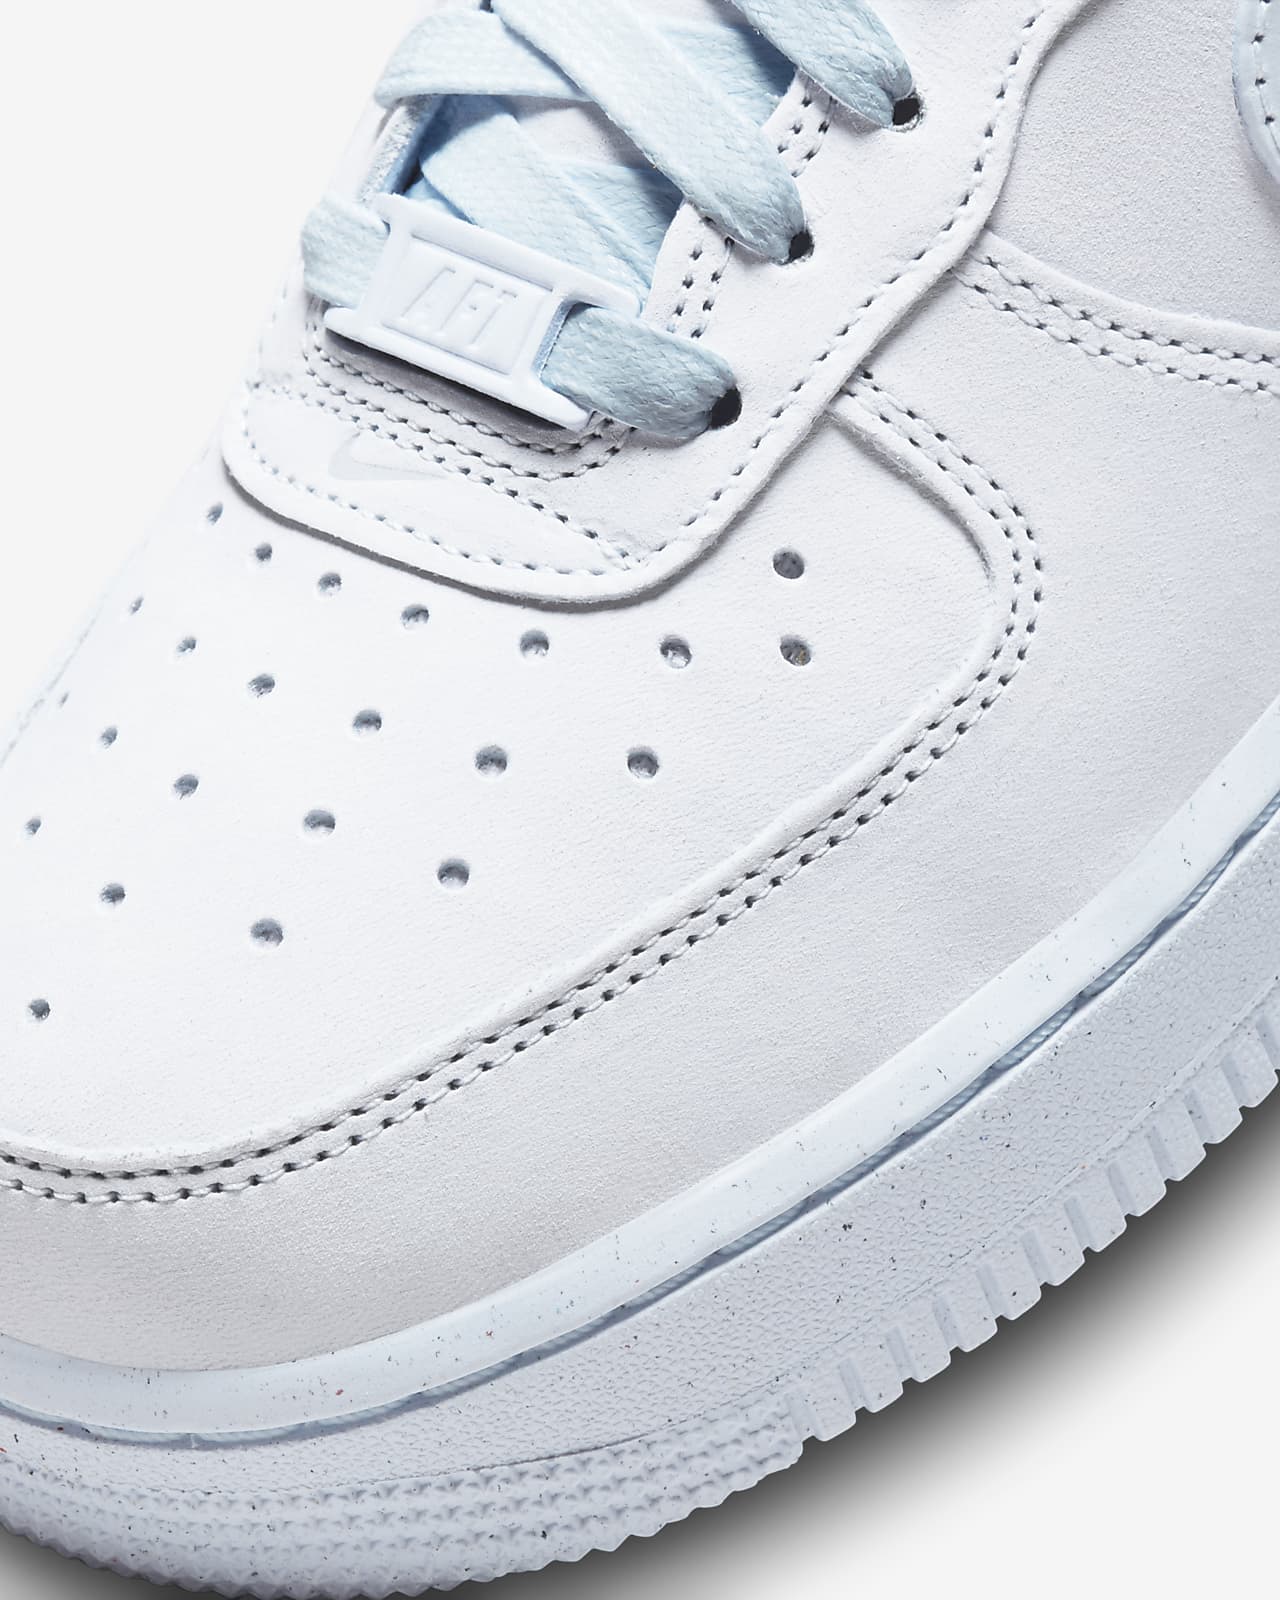 Nike Air Force 1 '07 Premium Sneakers in Blue Tint